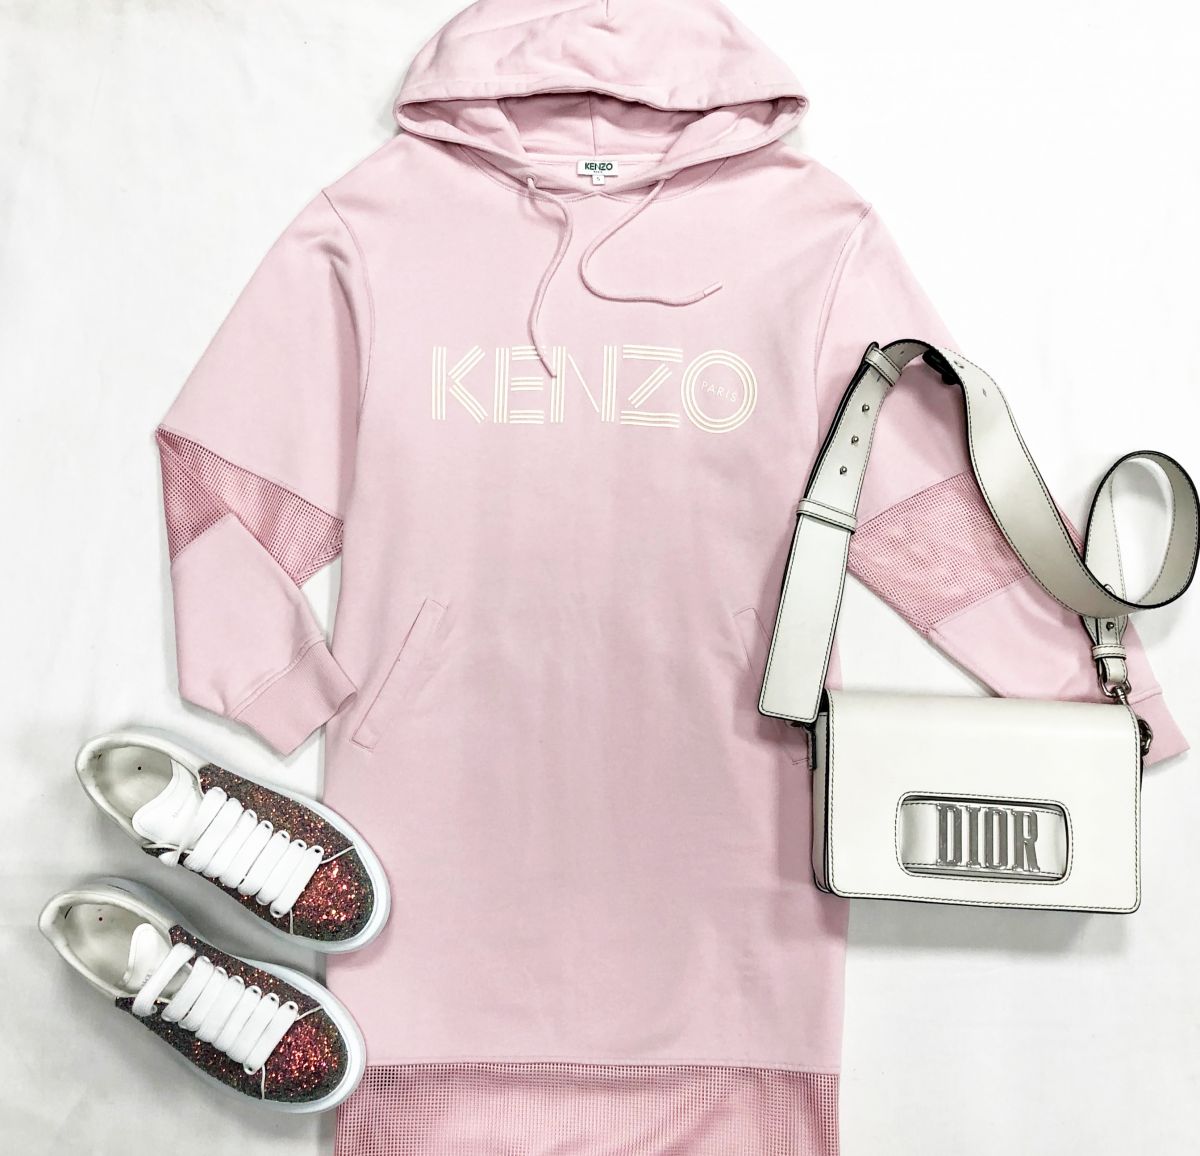 Толстовка Kenzo размер S цена 10 770 руб
Кеды Alexander McQueen размер 38 цена 18 462 руб
Сумка Christian Dior